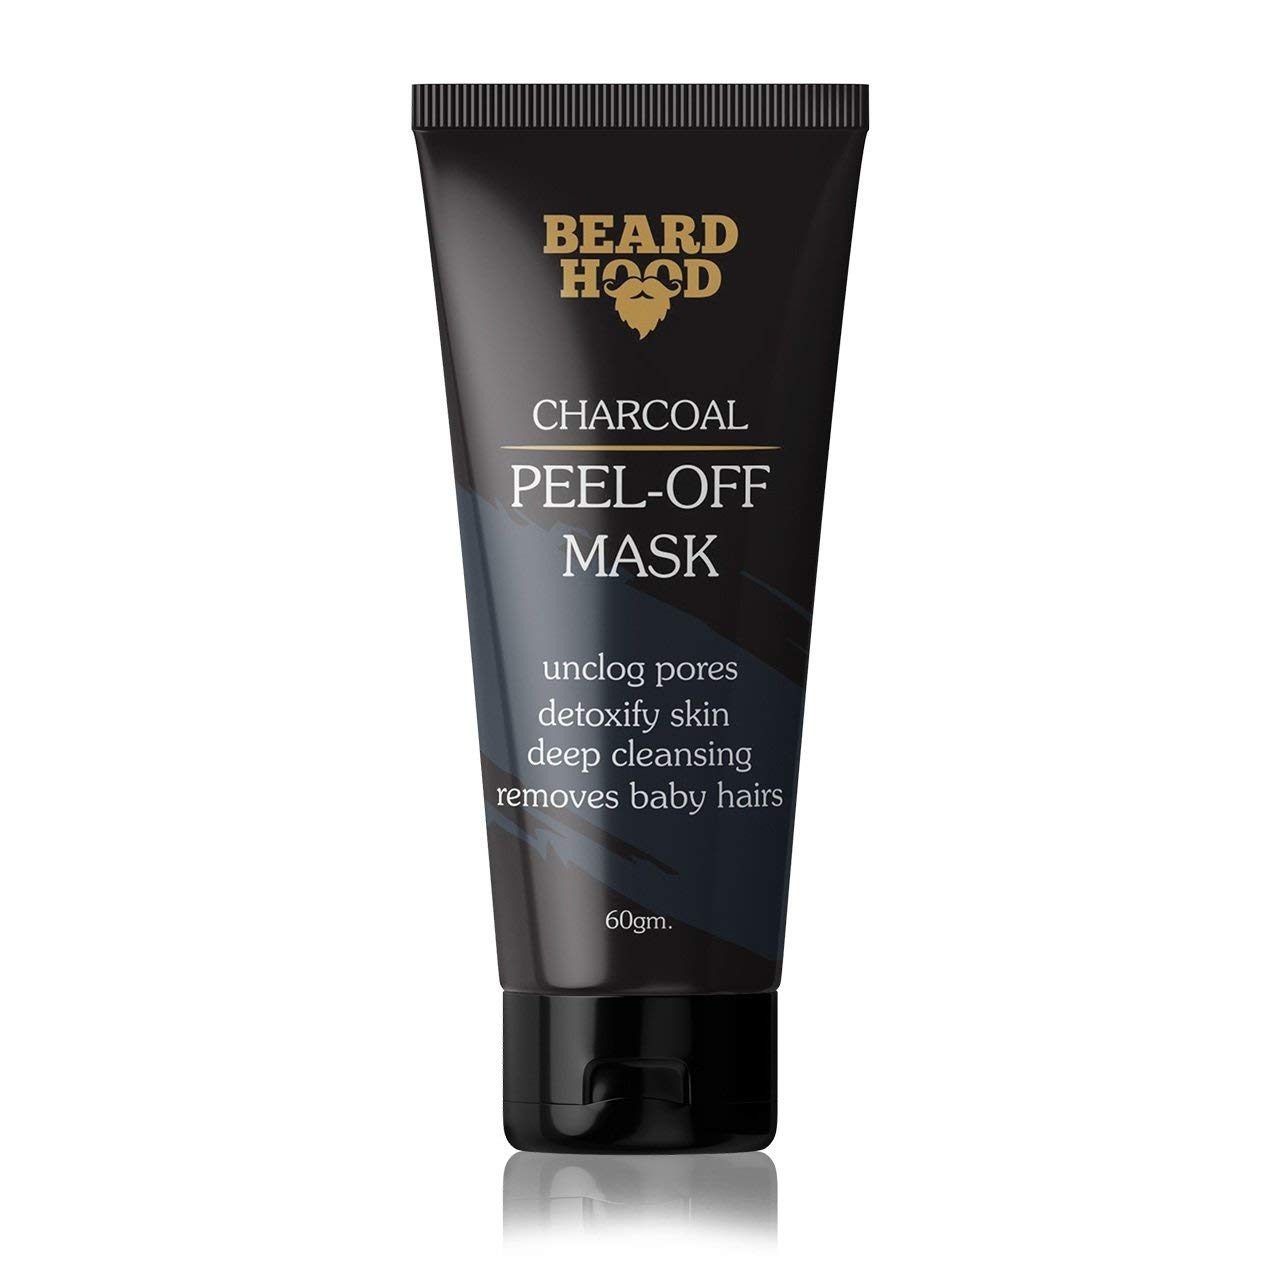 Beardhood Charcoal Peel Off Mask, Black, 60g Price in India